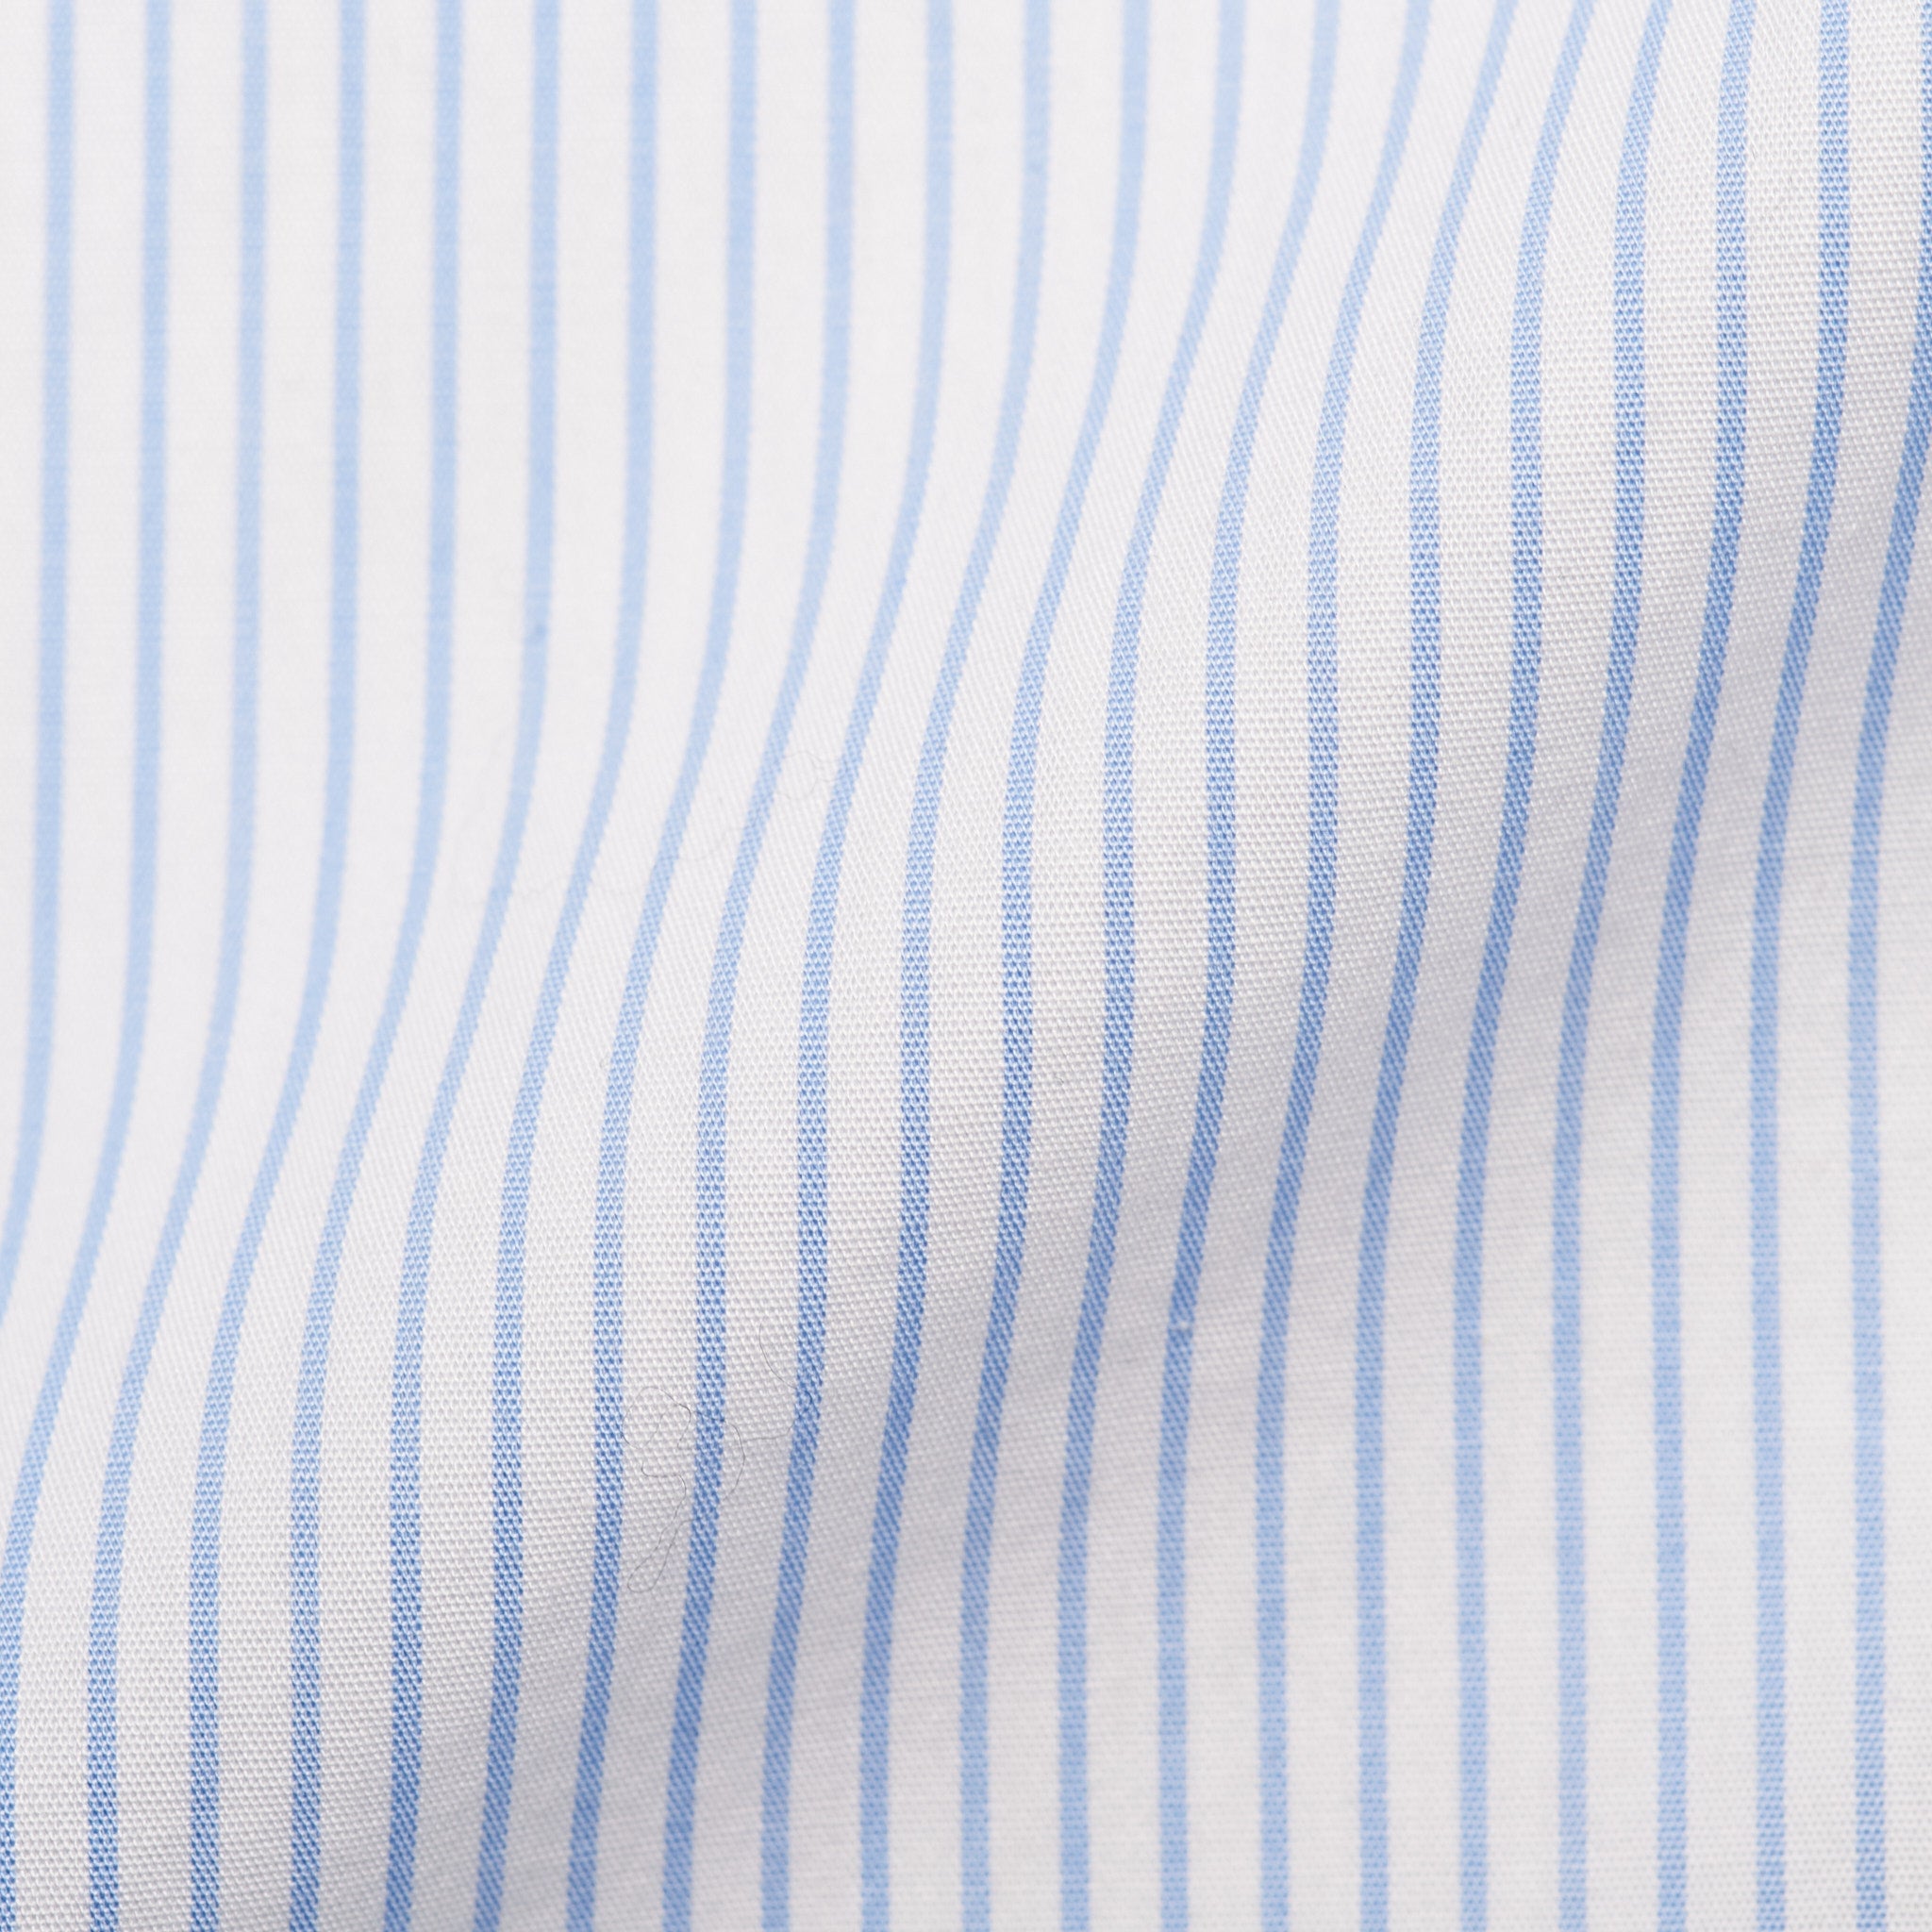 DI PIETRO Handmade Bespoke Blue Striped Cotton Button-Down Dress Shirt US 16.5 DI PIETRO